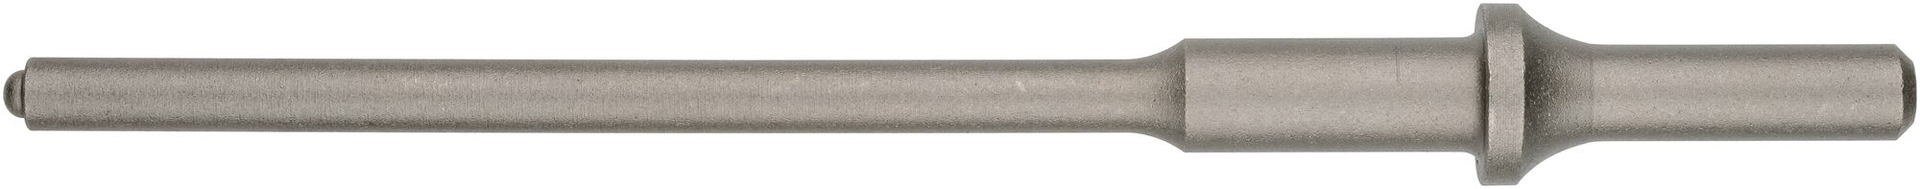 HAZET Vibrations-Splinttreiber 8 mm für Vibrations-Meißel 9035V-08